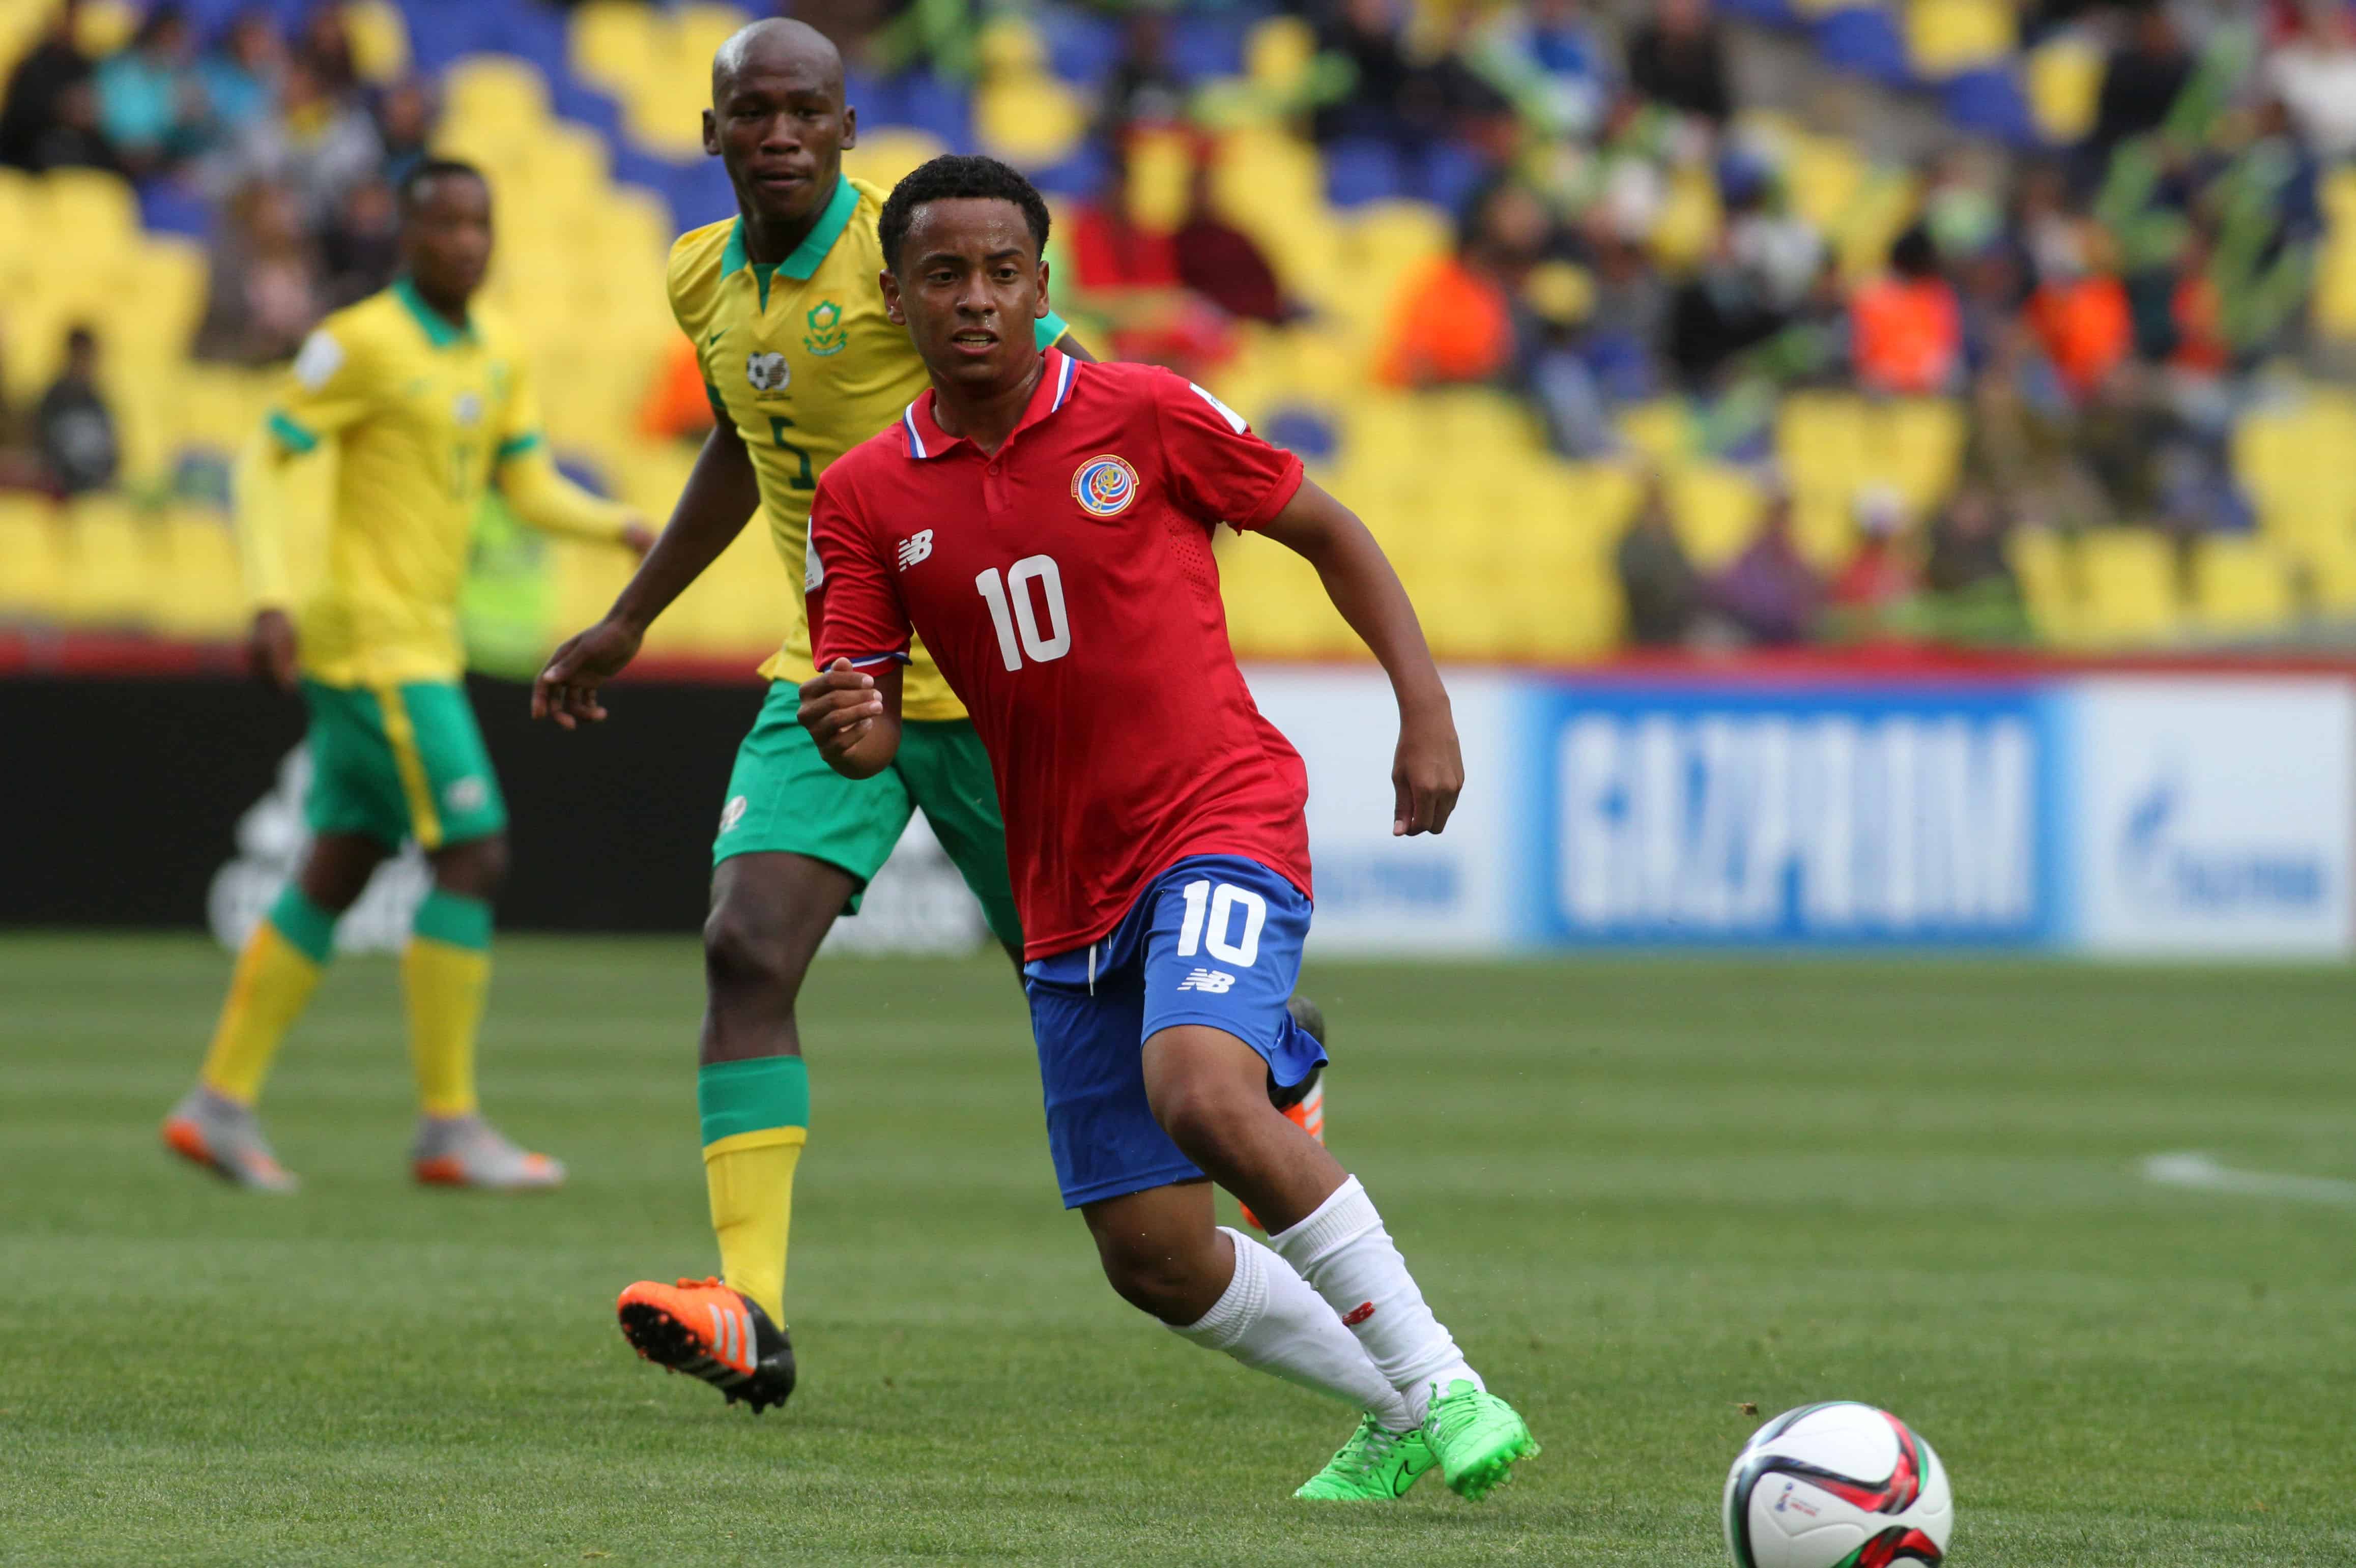 Costa Rica Under-17 World Cup